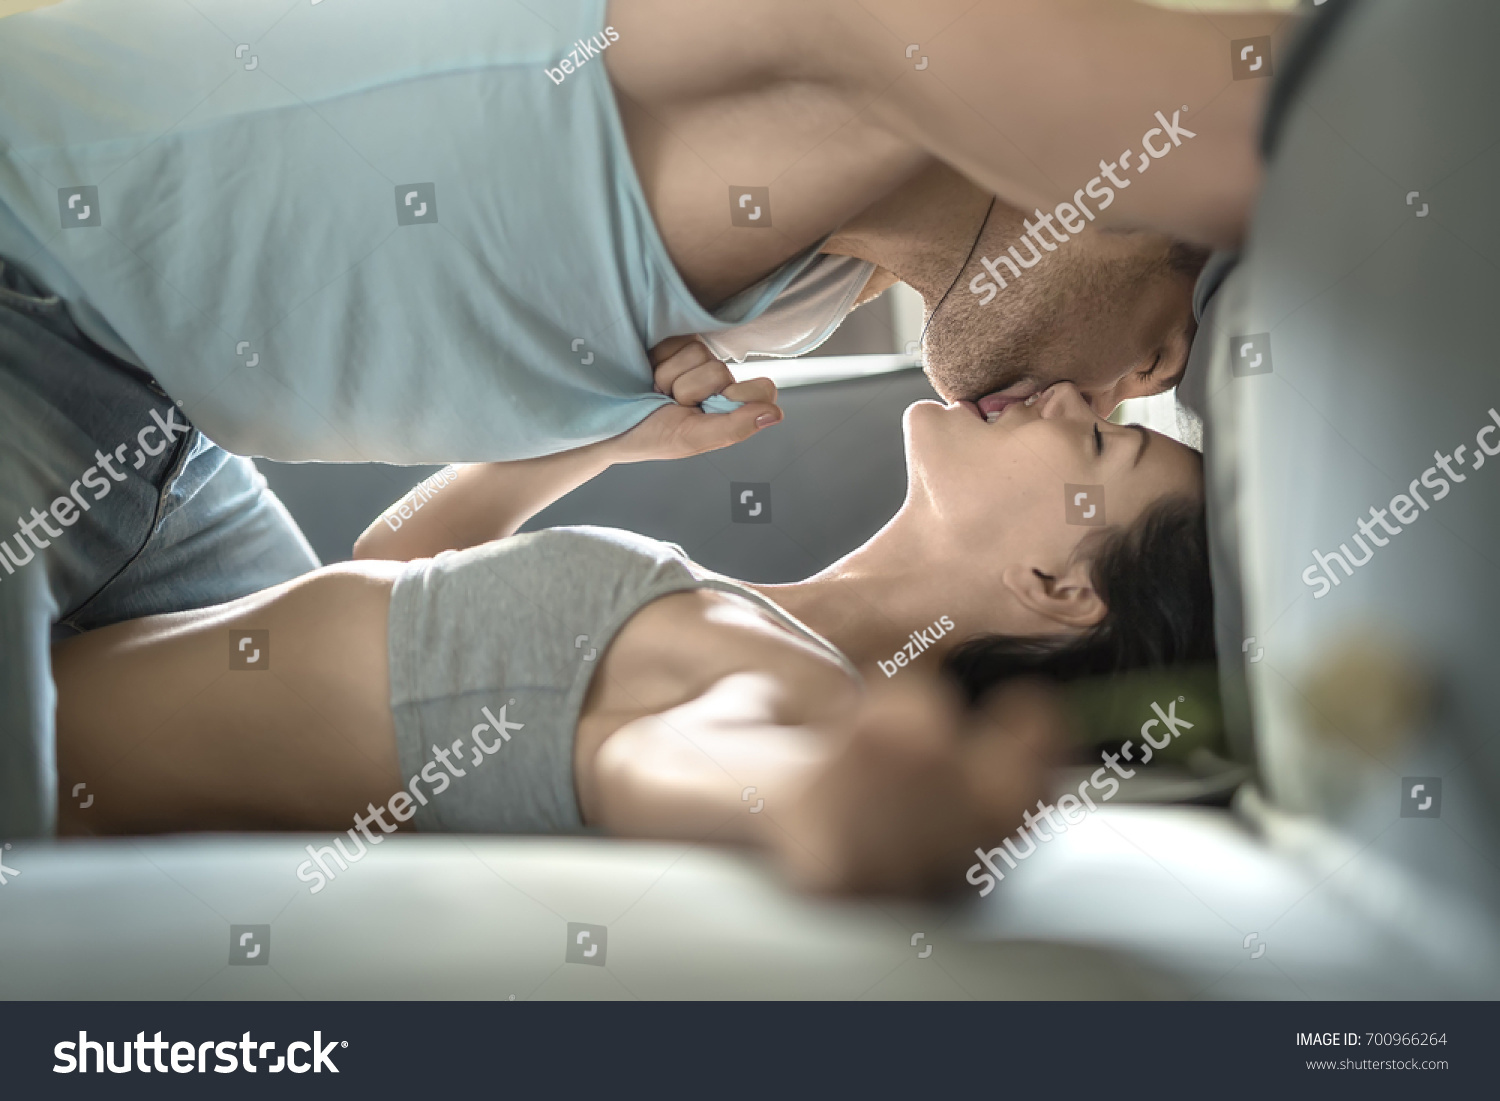 Girls Kissing On Sofa